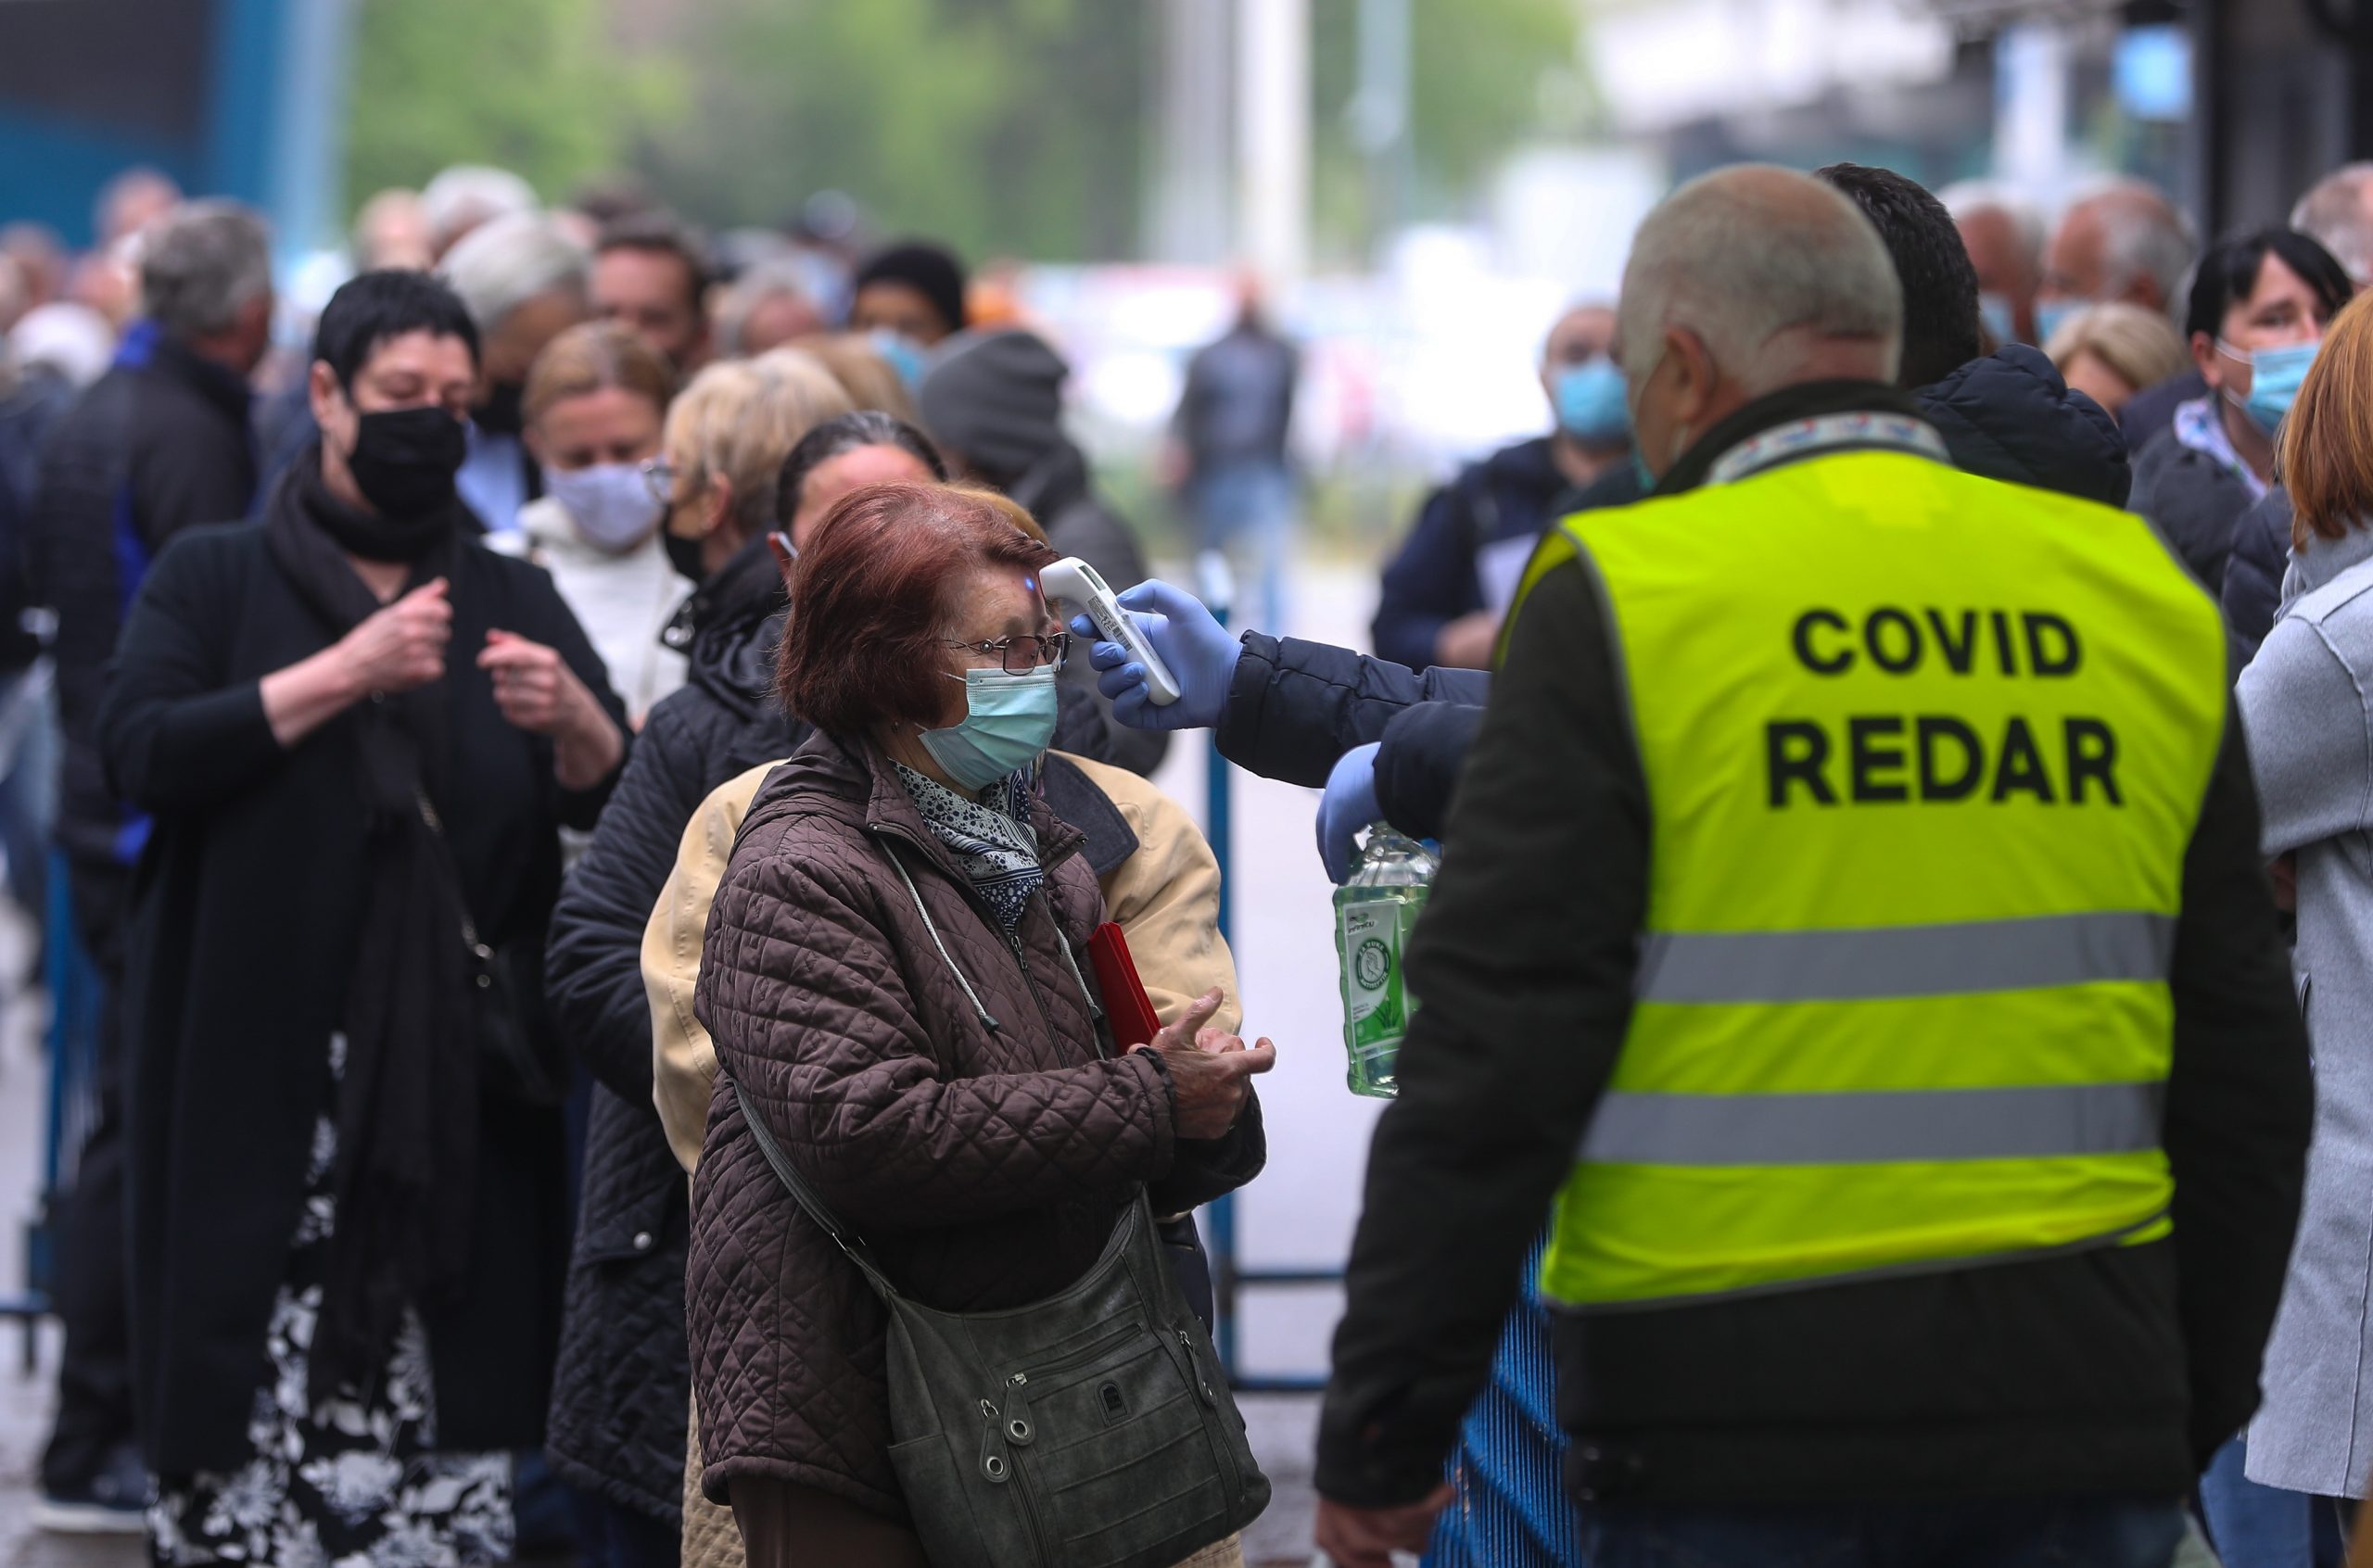 28.04.2021., Zagreb - Guzva na Velesjamu za cijepljenje protiv COVID 19 virusa.Photo:Zeljko Lukunic/PIXSELL